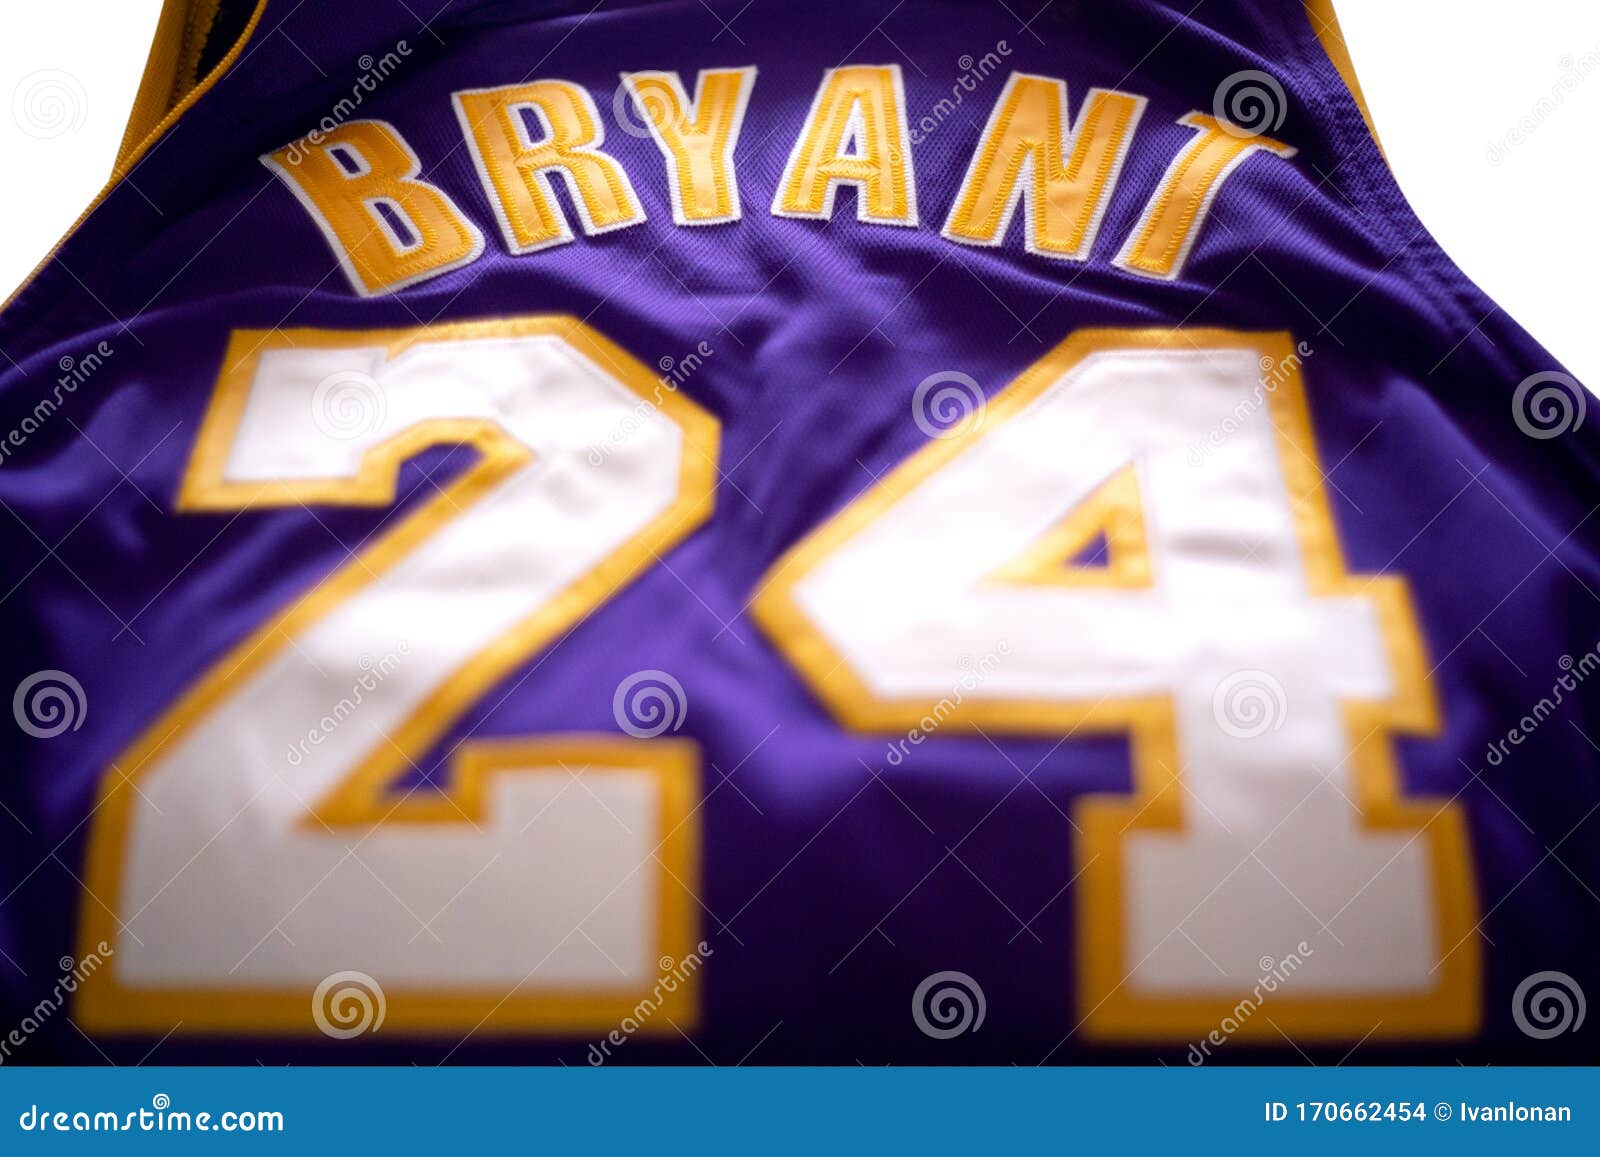 Legend Kobe Bryant Ice Cold Basketball Jersey XL / Ice Blue